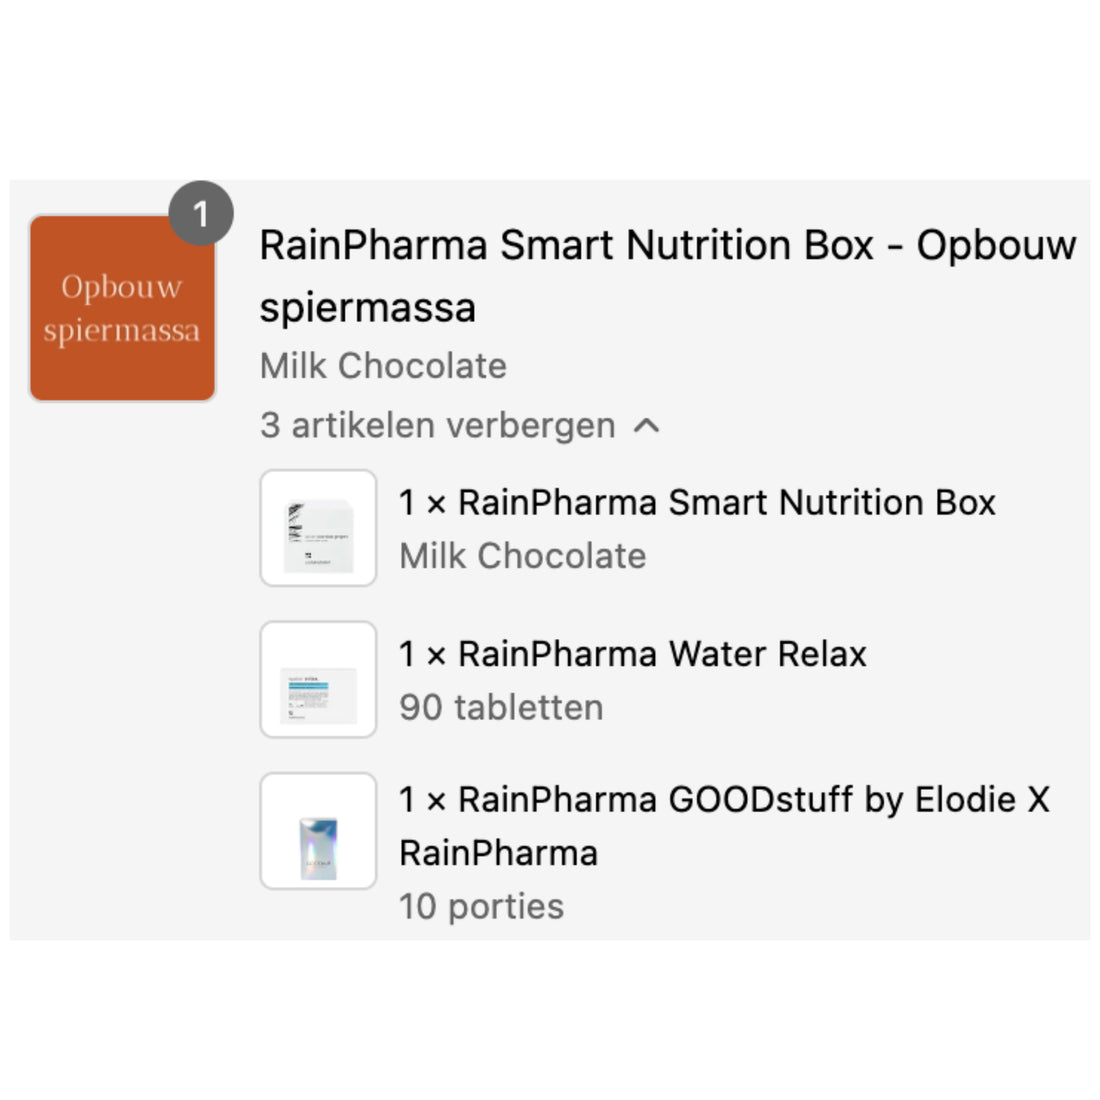 RainPharma Smart Nutrition Box - Opbouw spiermassa